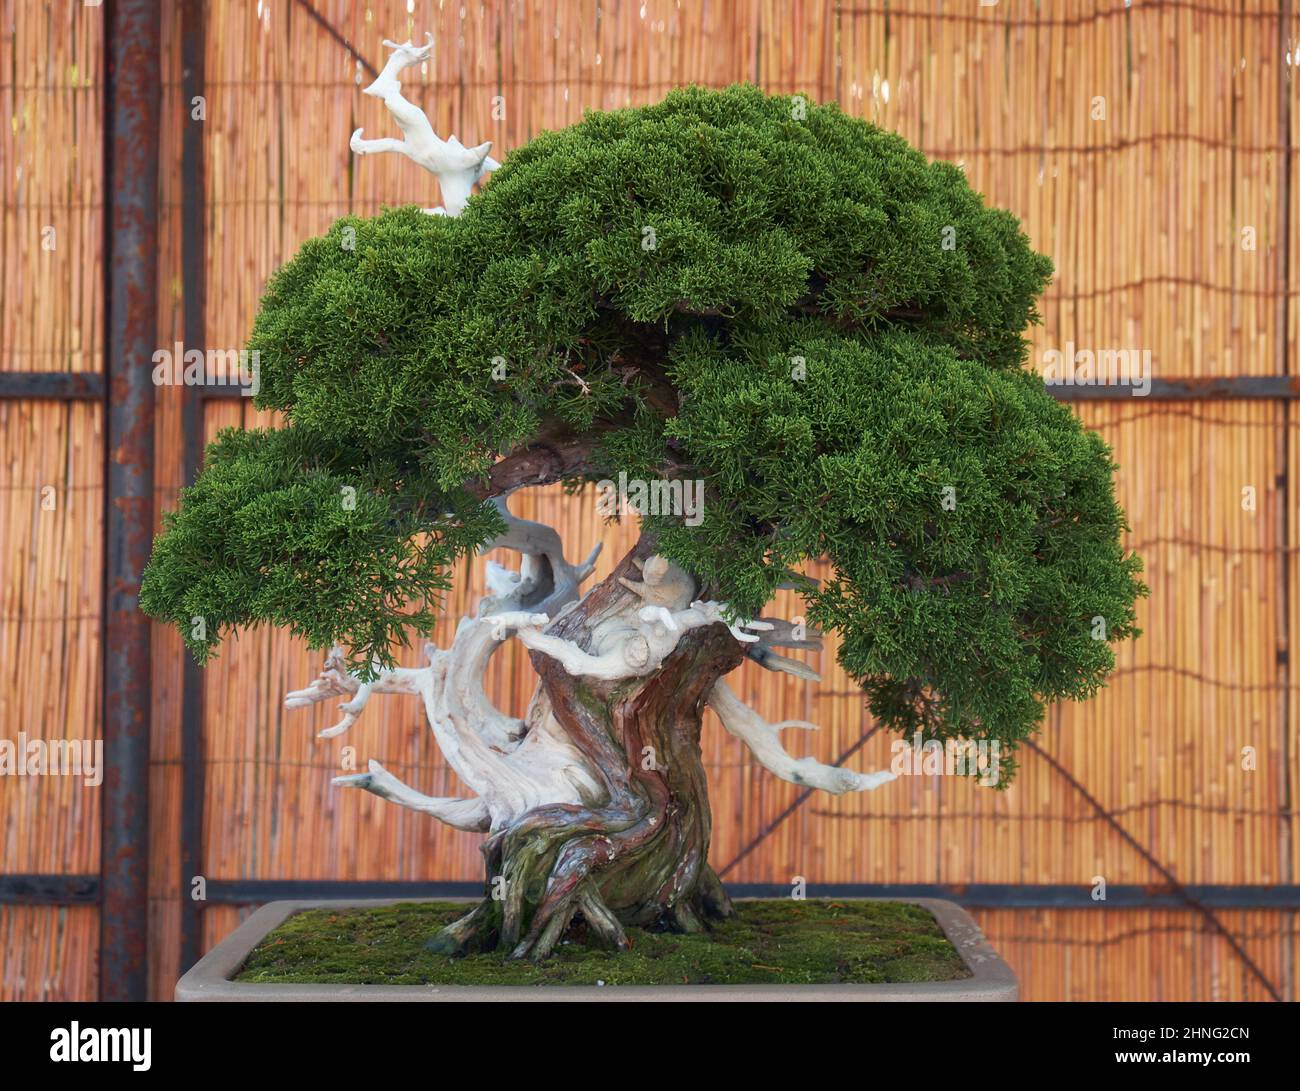 Nagoya, Japan - October 20, 2019: The view of the small decorative bonsai tree of Chinese juniper (Juniperus chinensis ) at the annual Nagoya Castle B Stock Photo